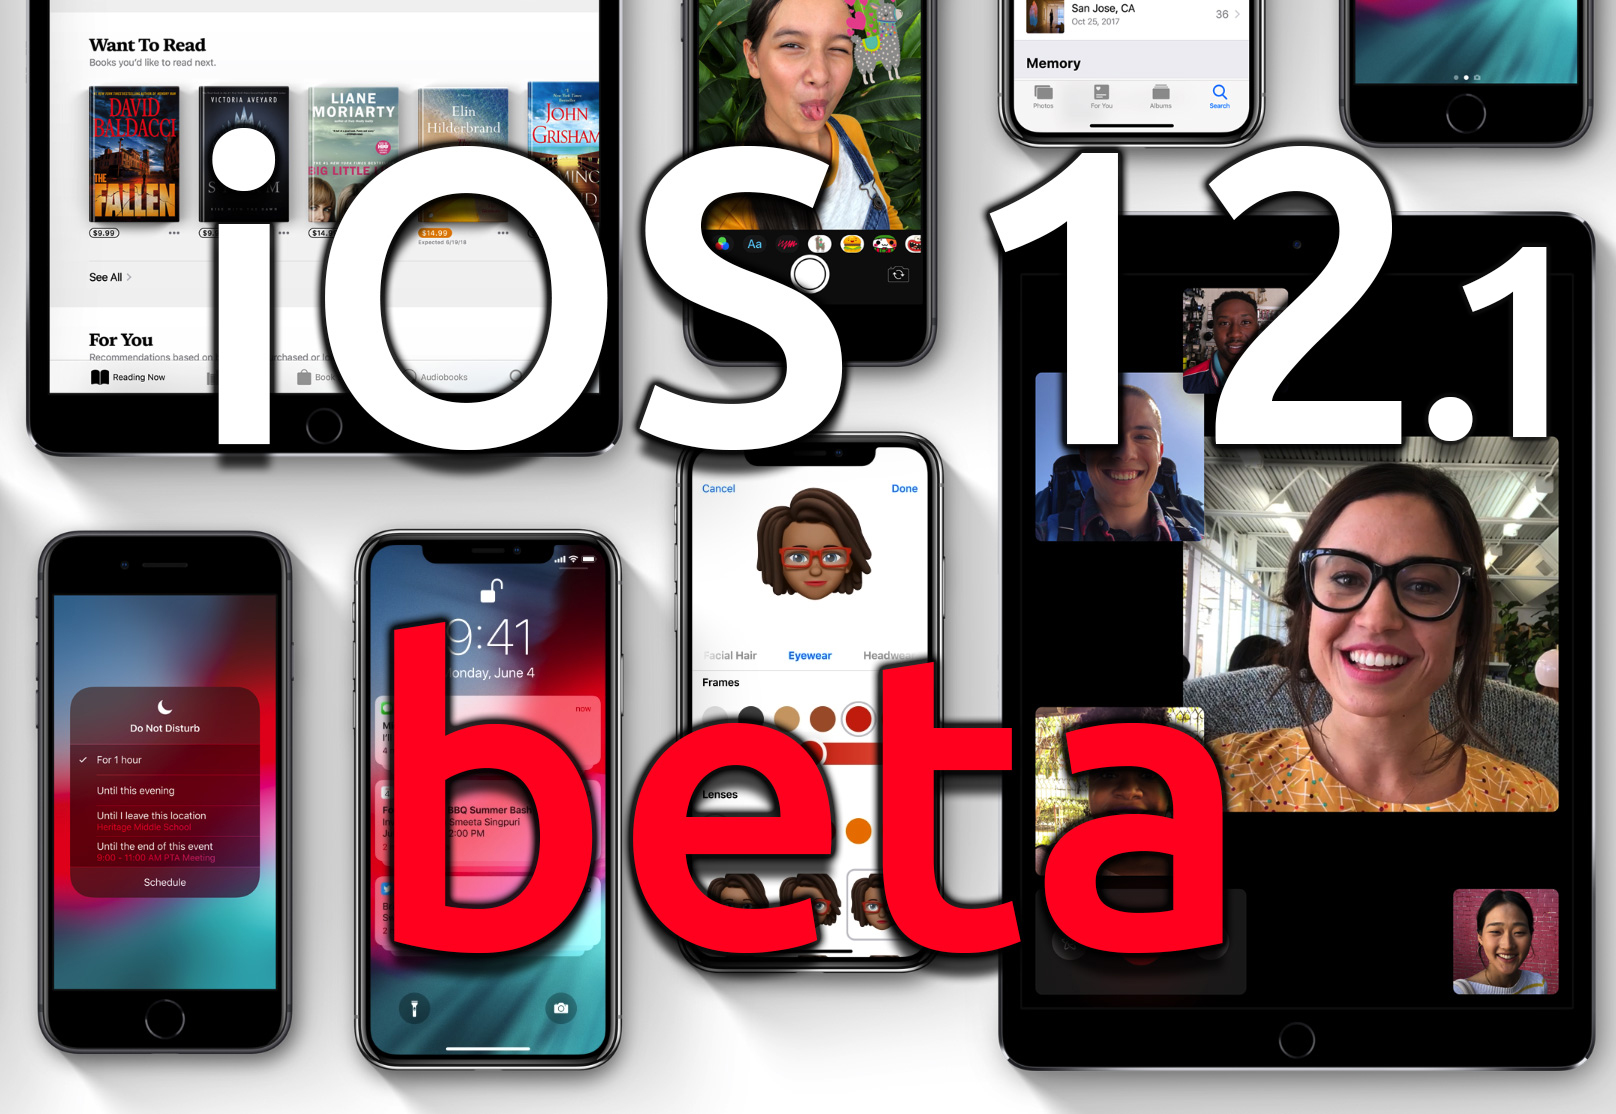 iOS 12.1 beta